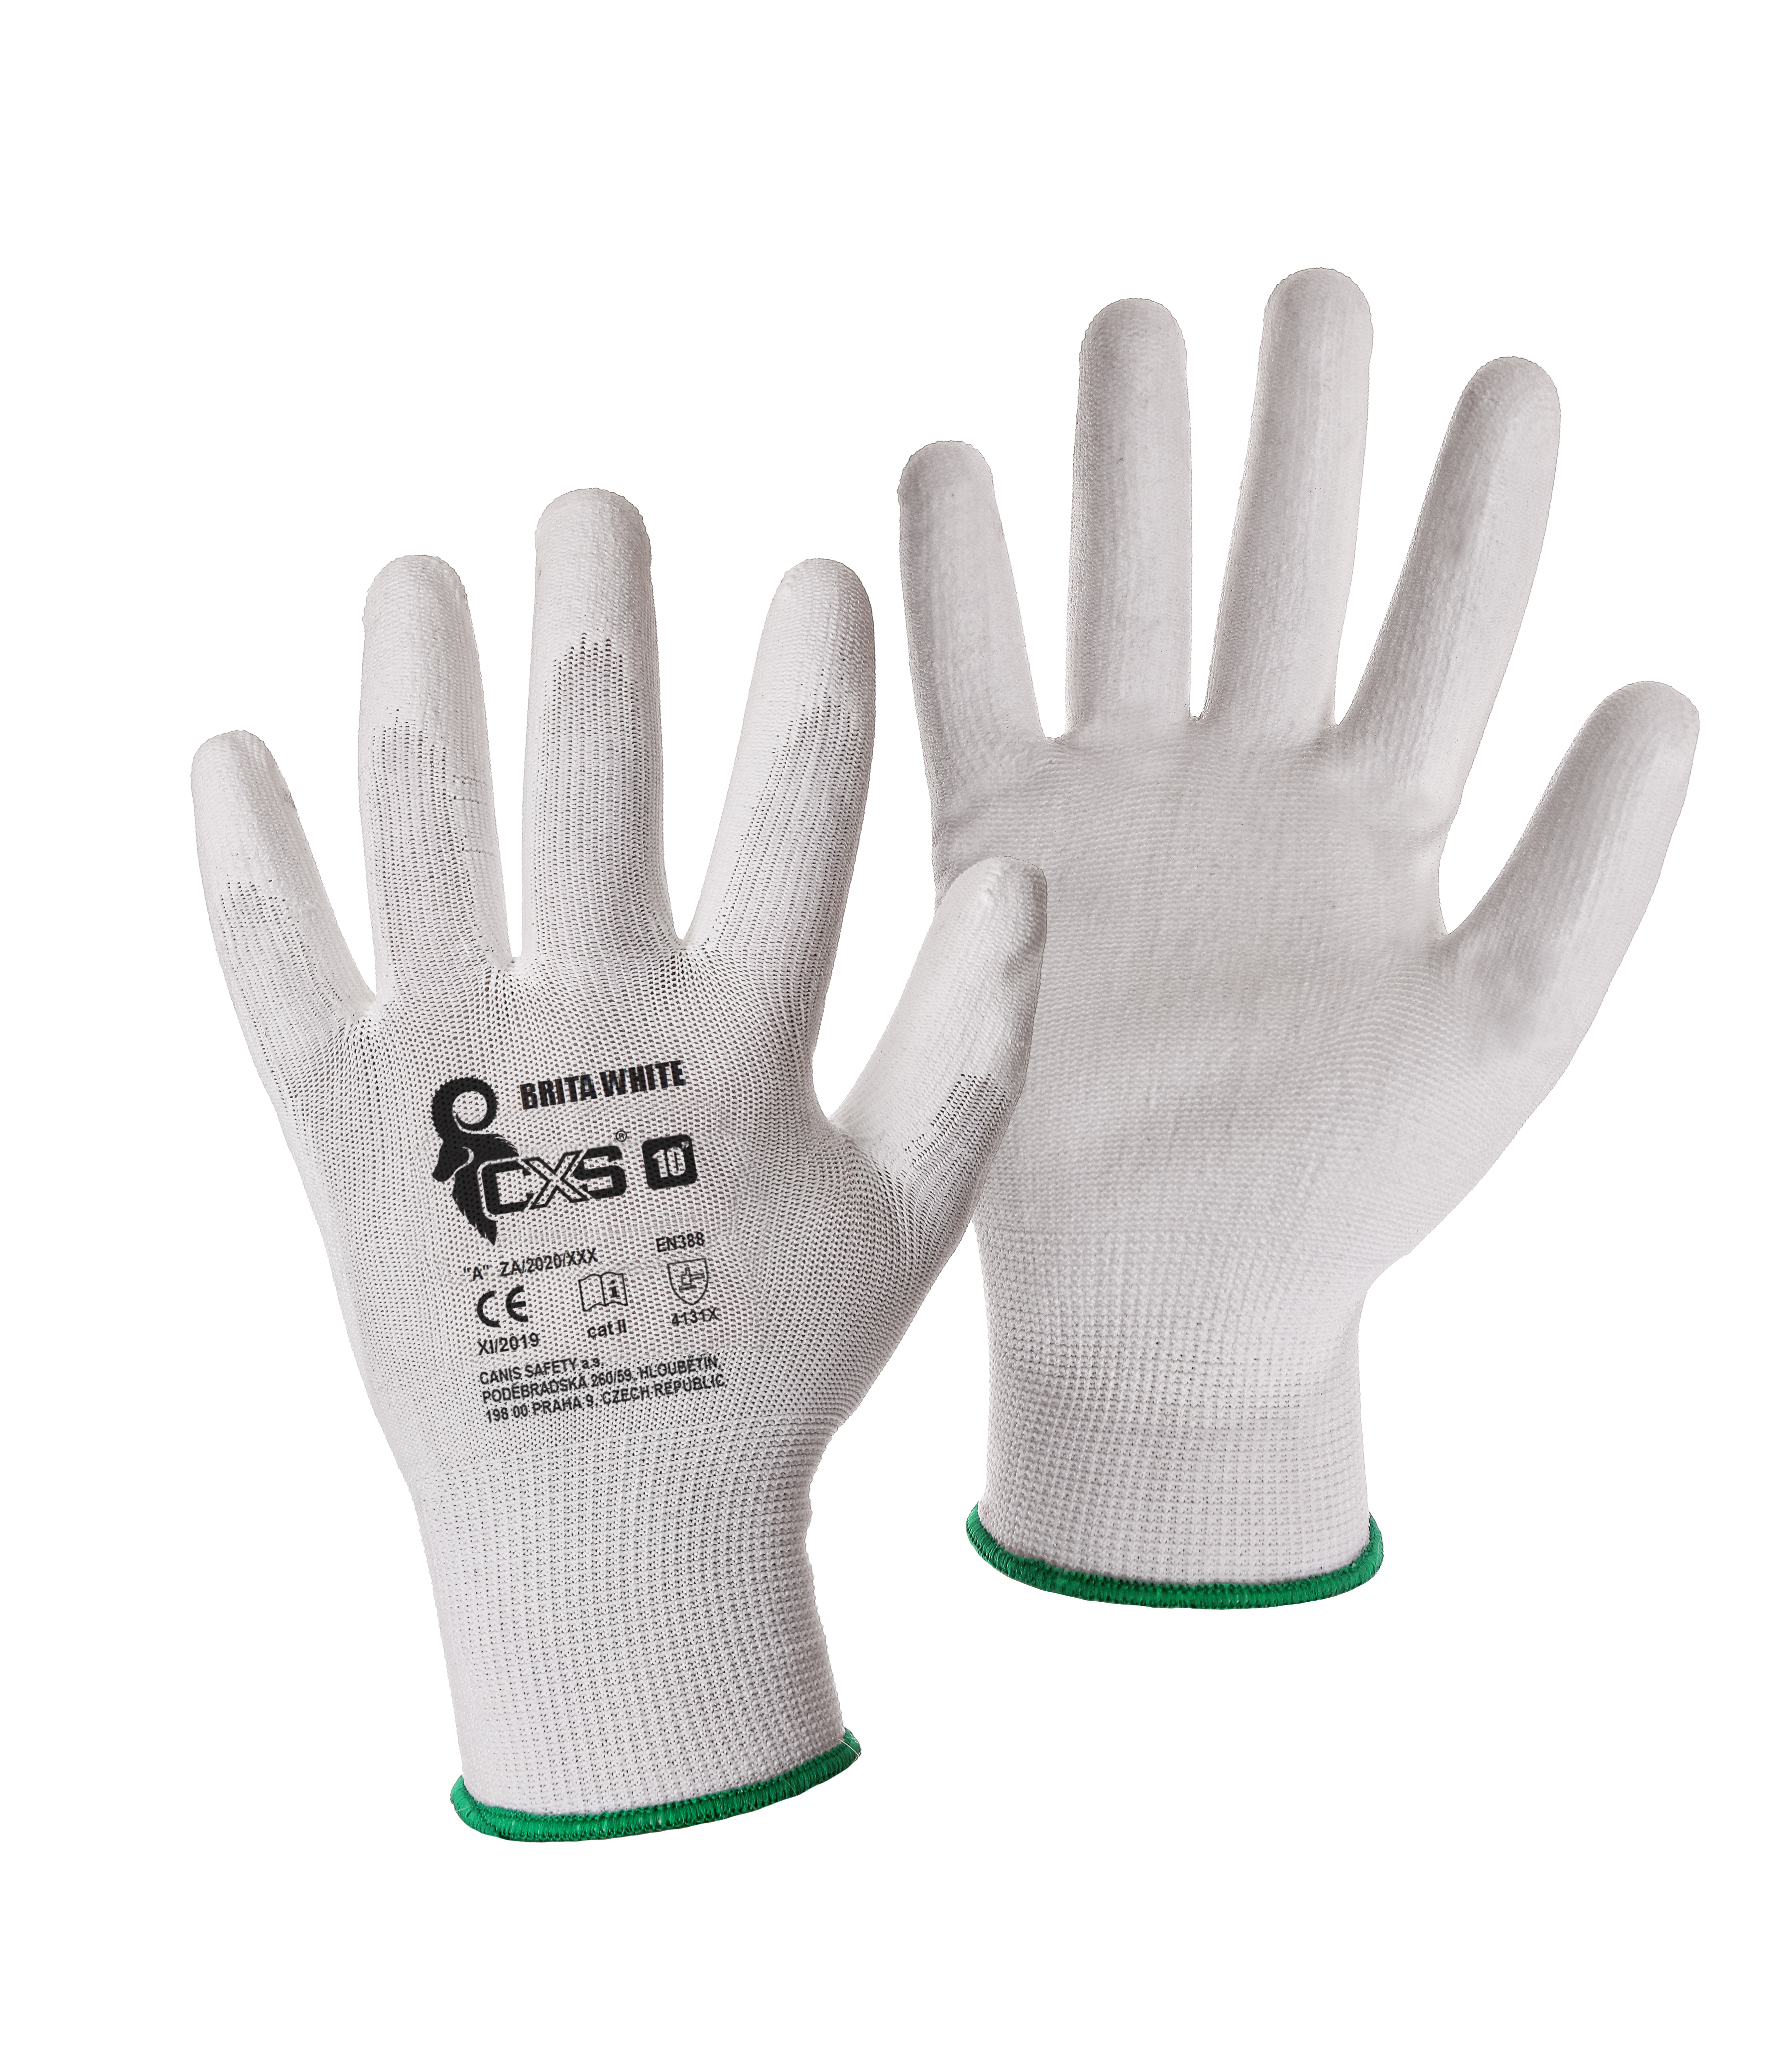 rukavice BRITA WHITE, s PU dlaní a úpletem, velikost 11 0.02 Kg TOP Sklad4 606044 266